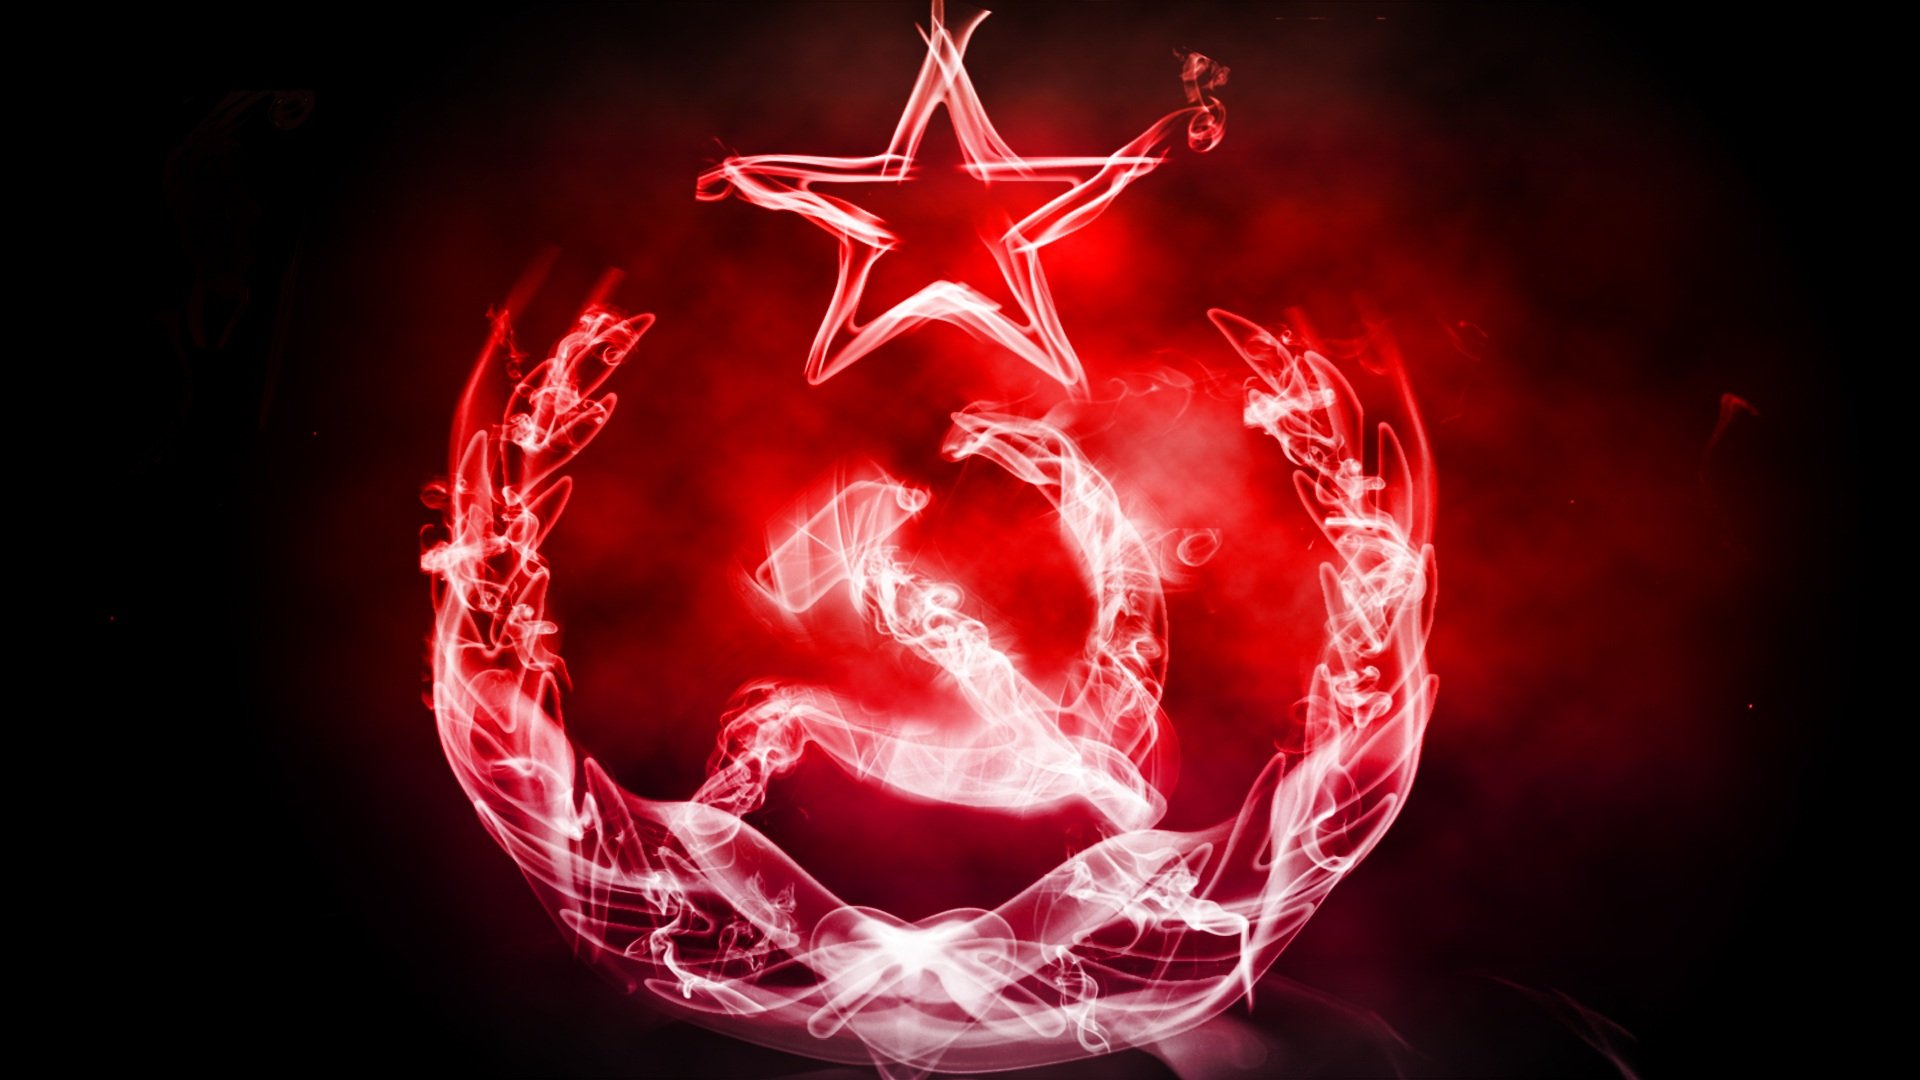 communism Russia CCCP USSR wallpaper background